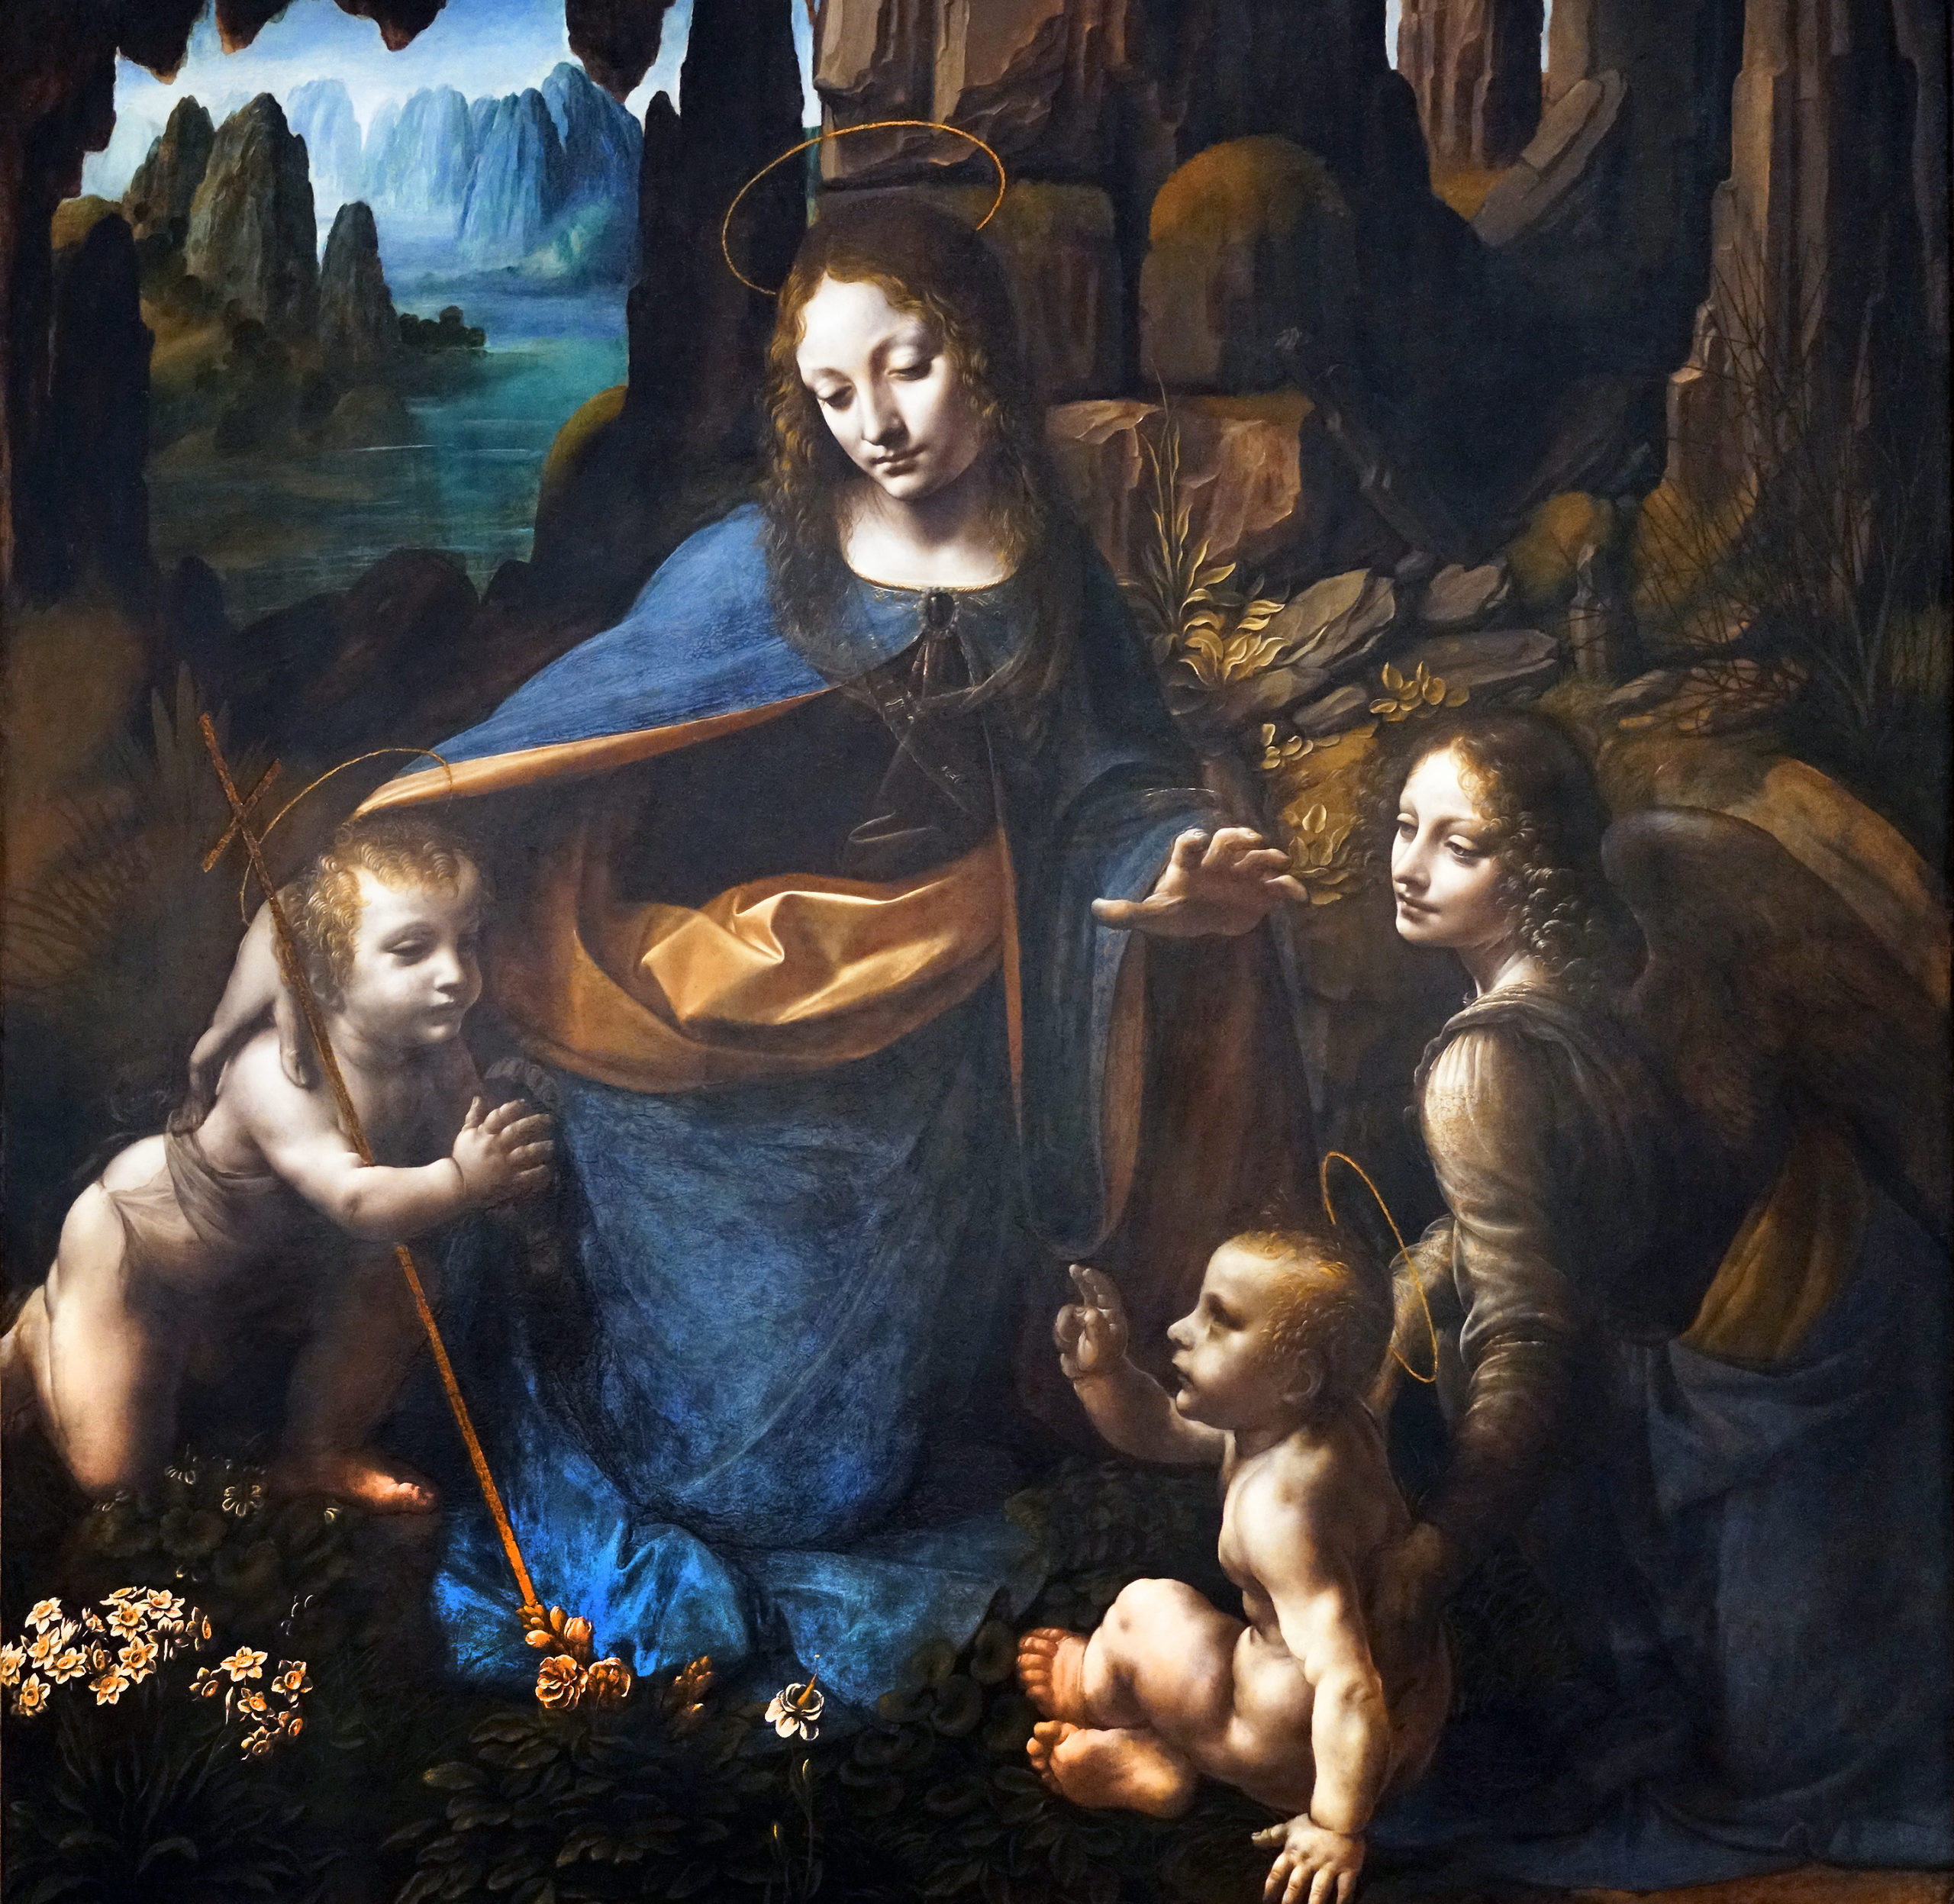 Mary, St. John, Christ and an angel (detail), The Virgin of the Rocks, Leonardo da Vinci, c. 1491–1508, oil on panel, 189.5 x 120 cm (The National Gallery, London; photo: Steven Zucker, CC BY-NC-SA 2.0)